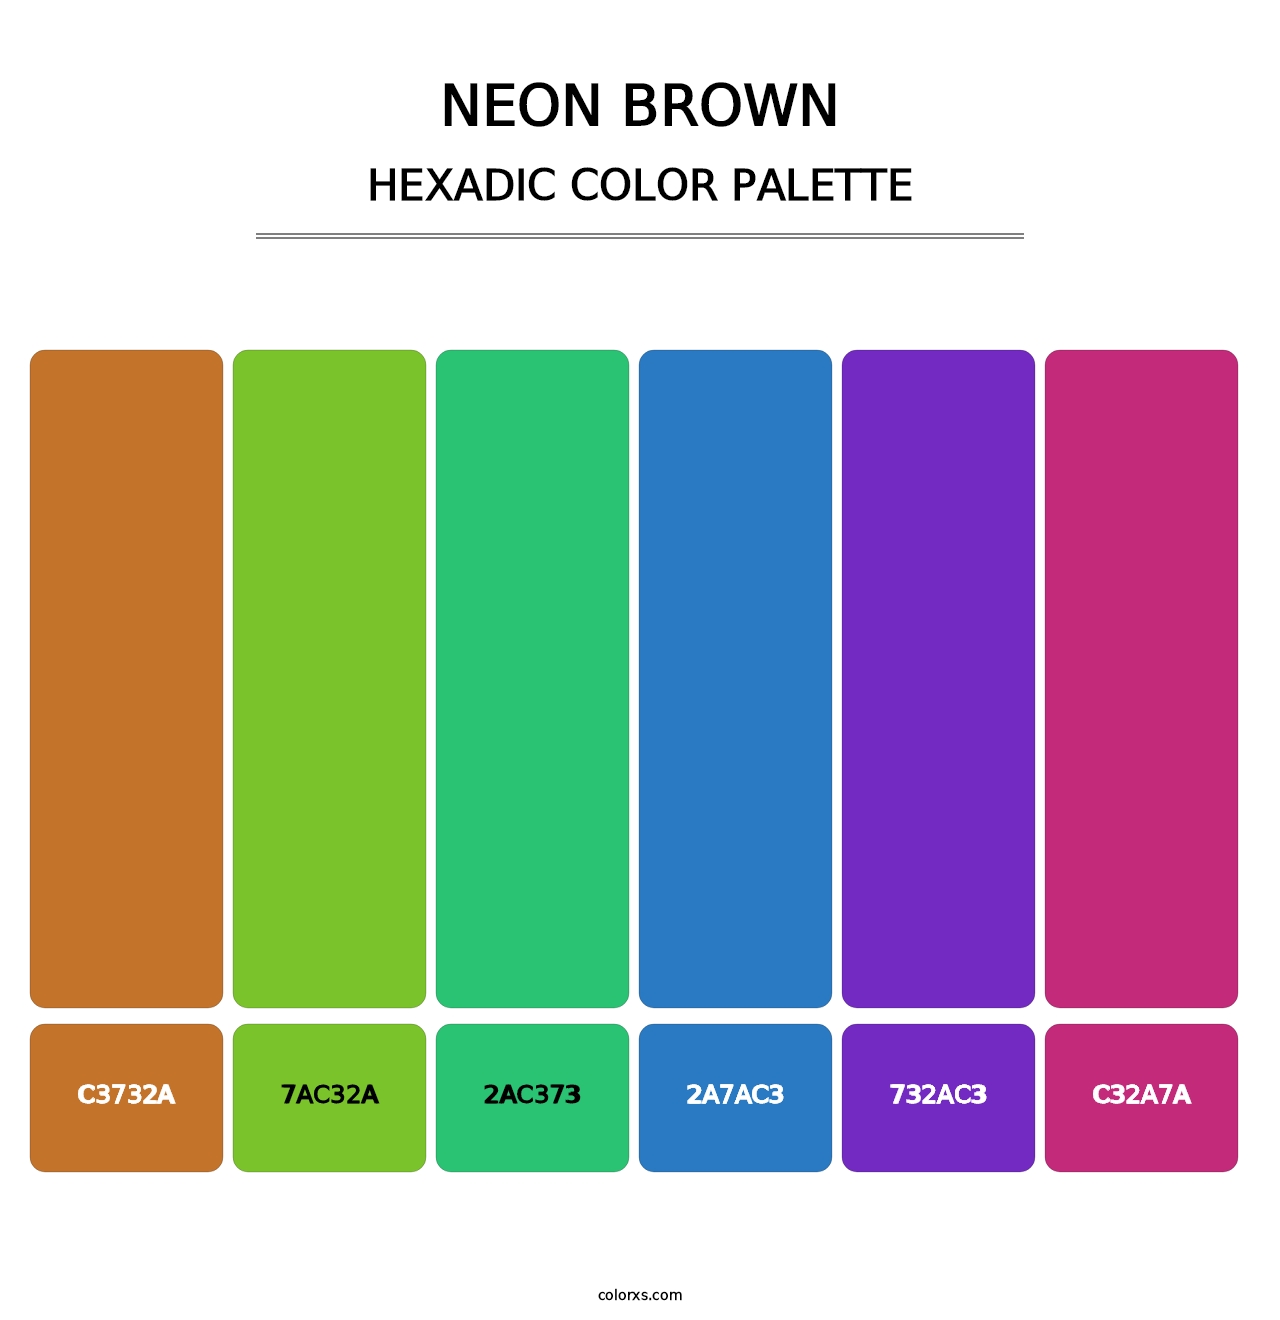 Neon Brown - Hexadic Color Palette